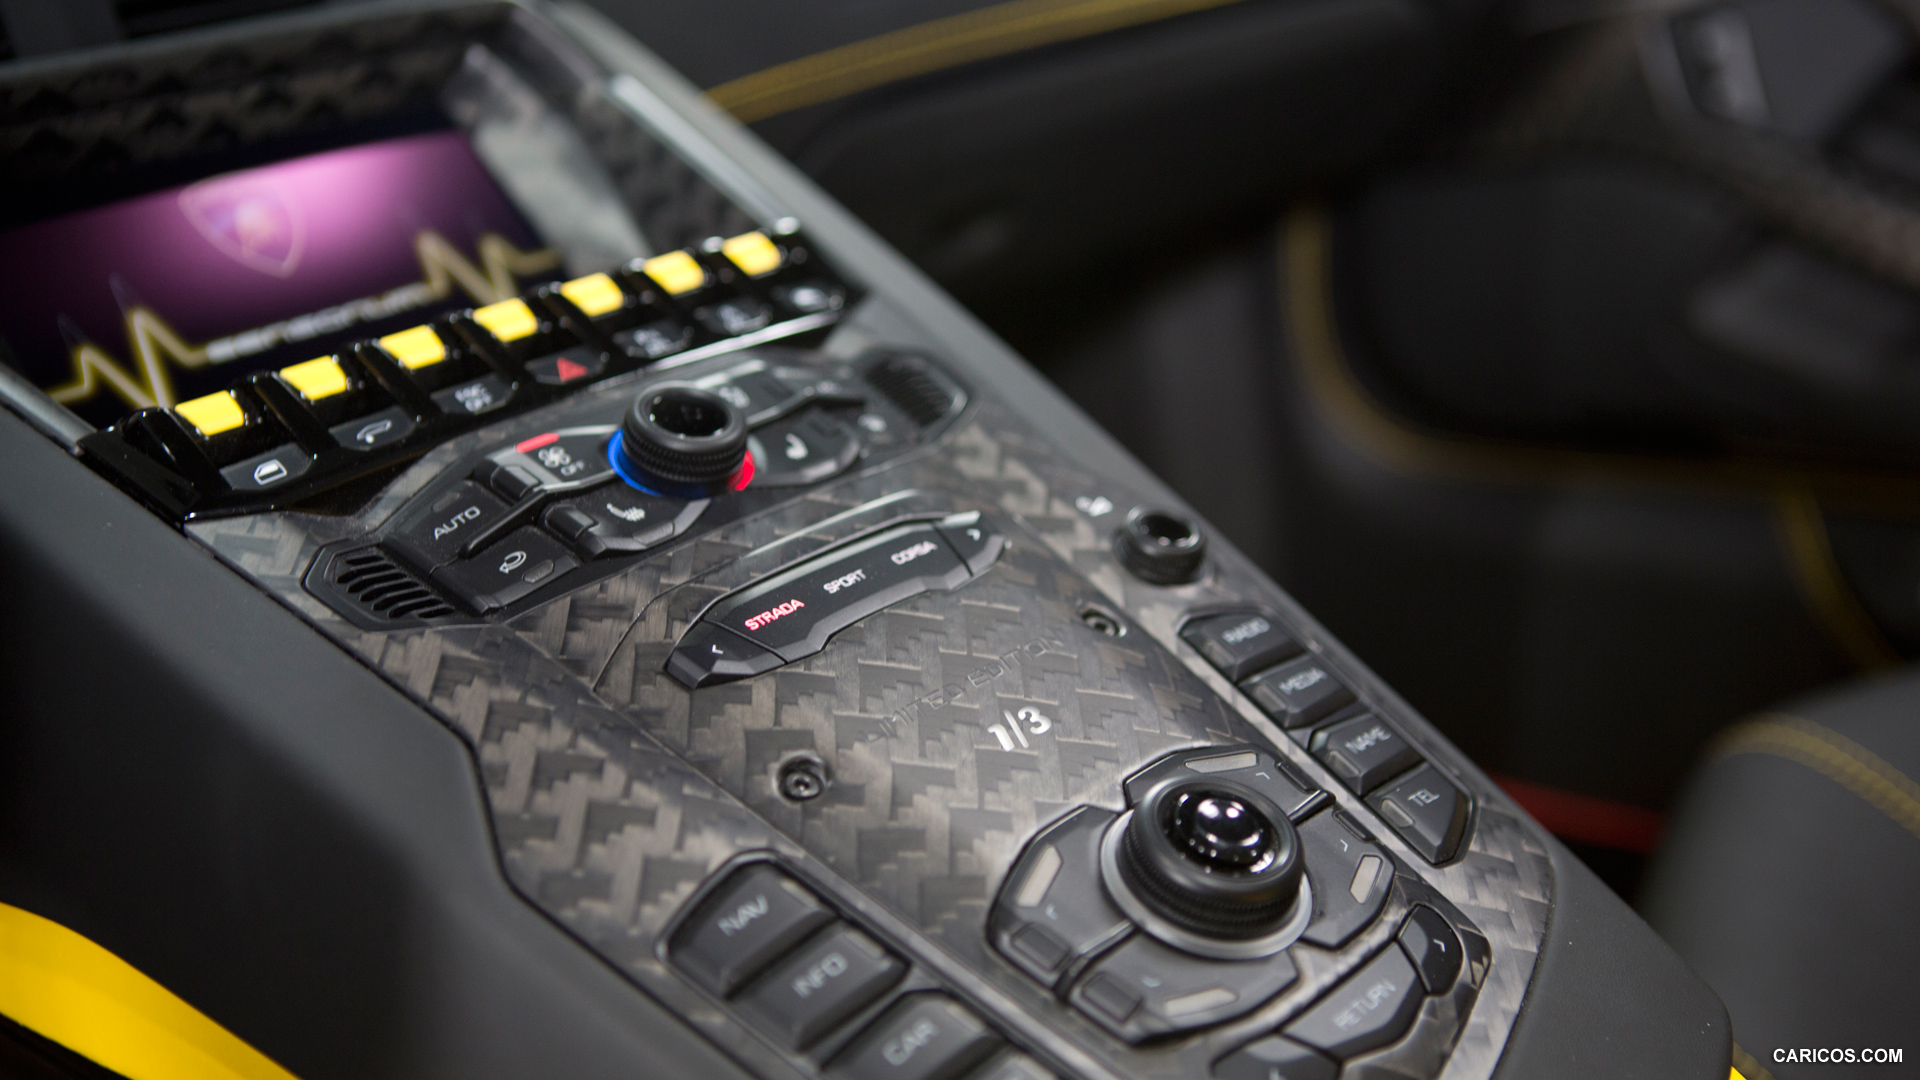 2014 Mansory Carbonado Apertos based on Lamborghini Aventador Roadster  - Interior Detail, #6 of 8